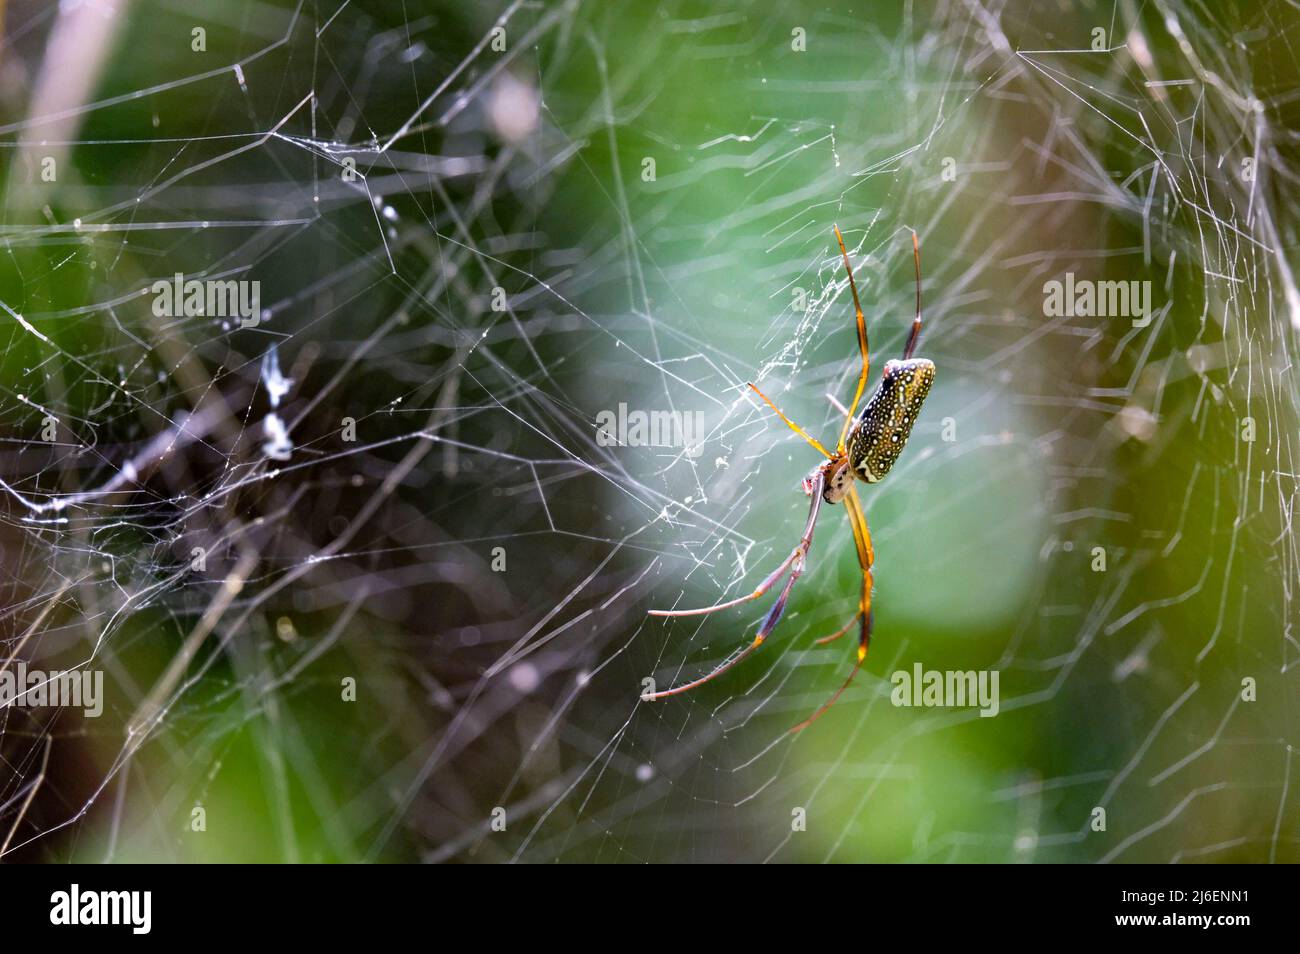 Spider and web in bird park near iguazu falls brazil Stock Photo